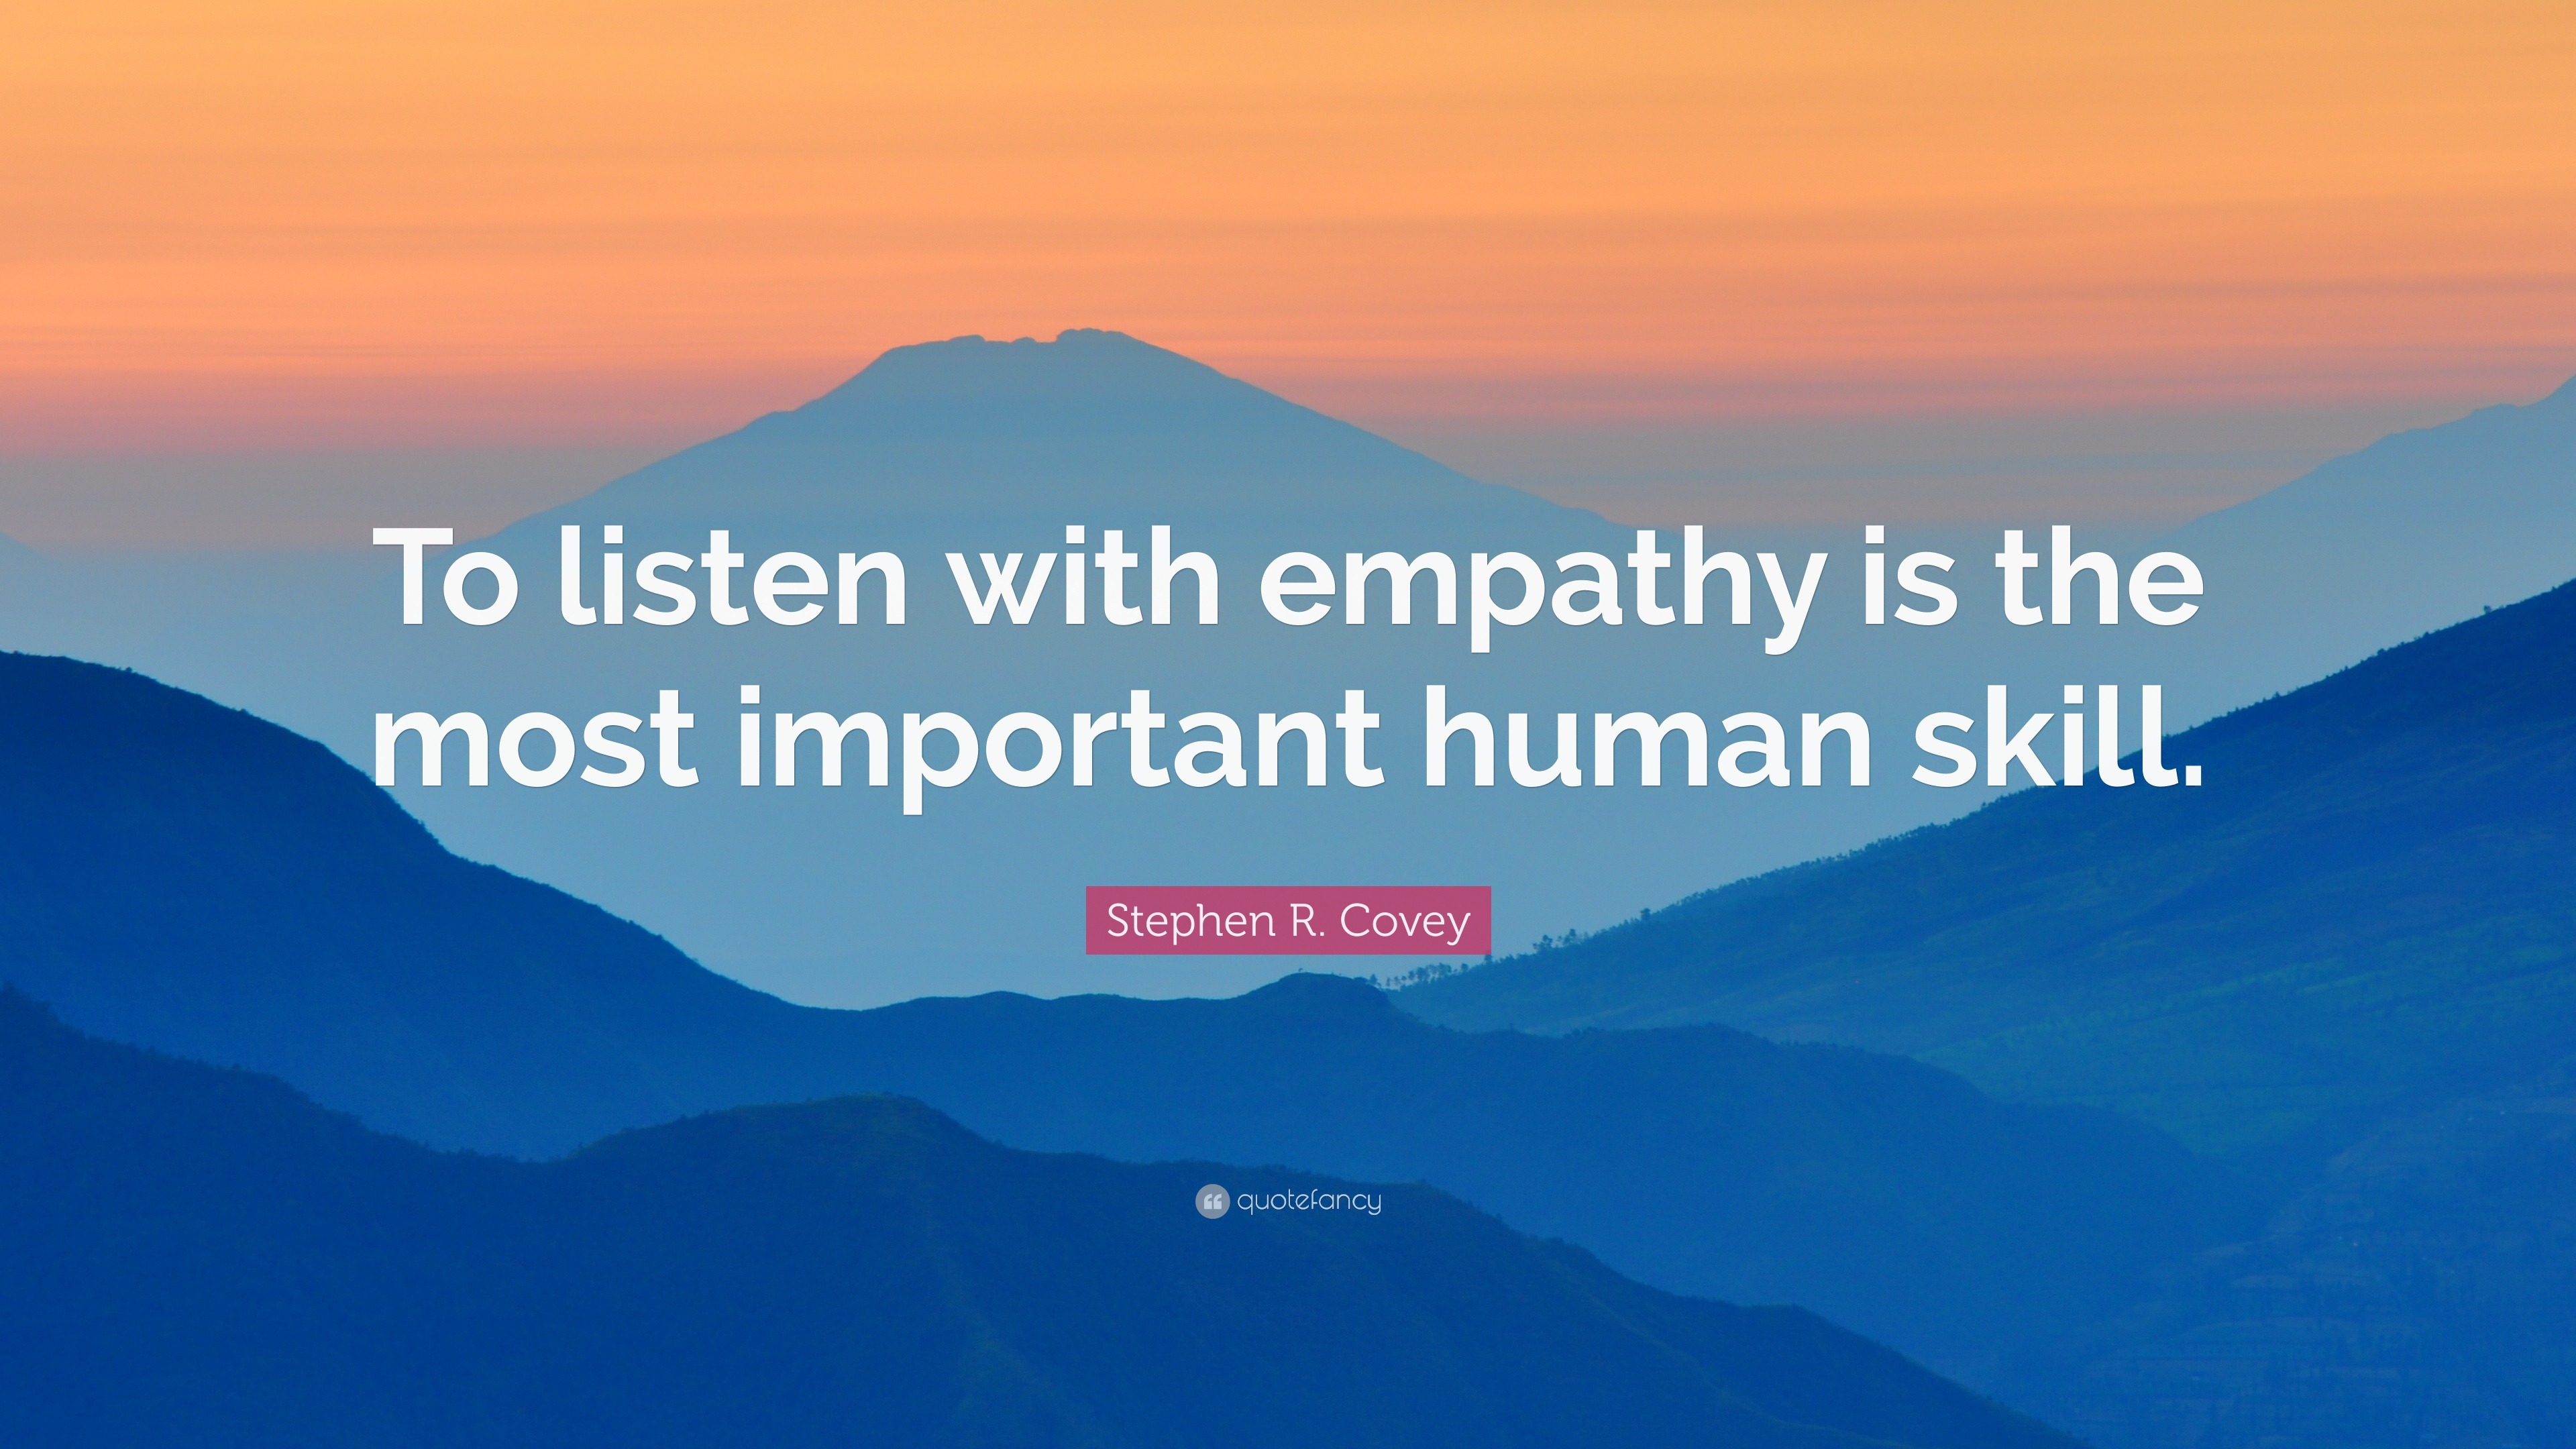 empathic listening